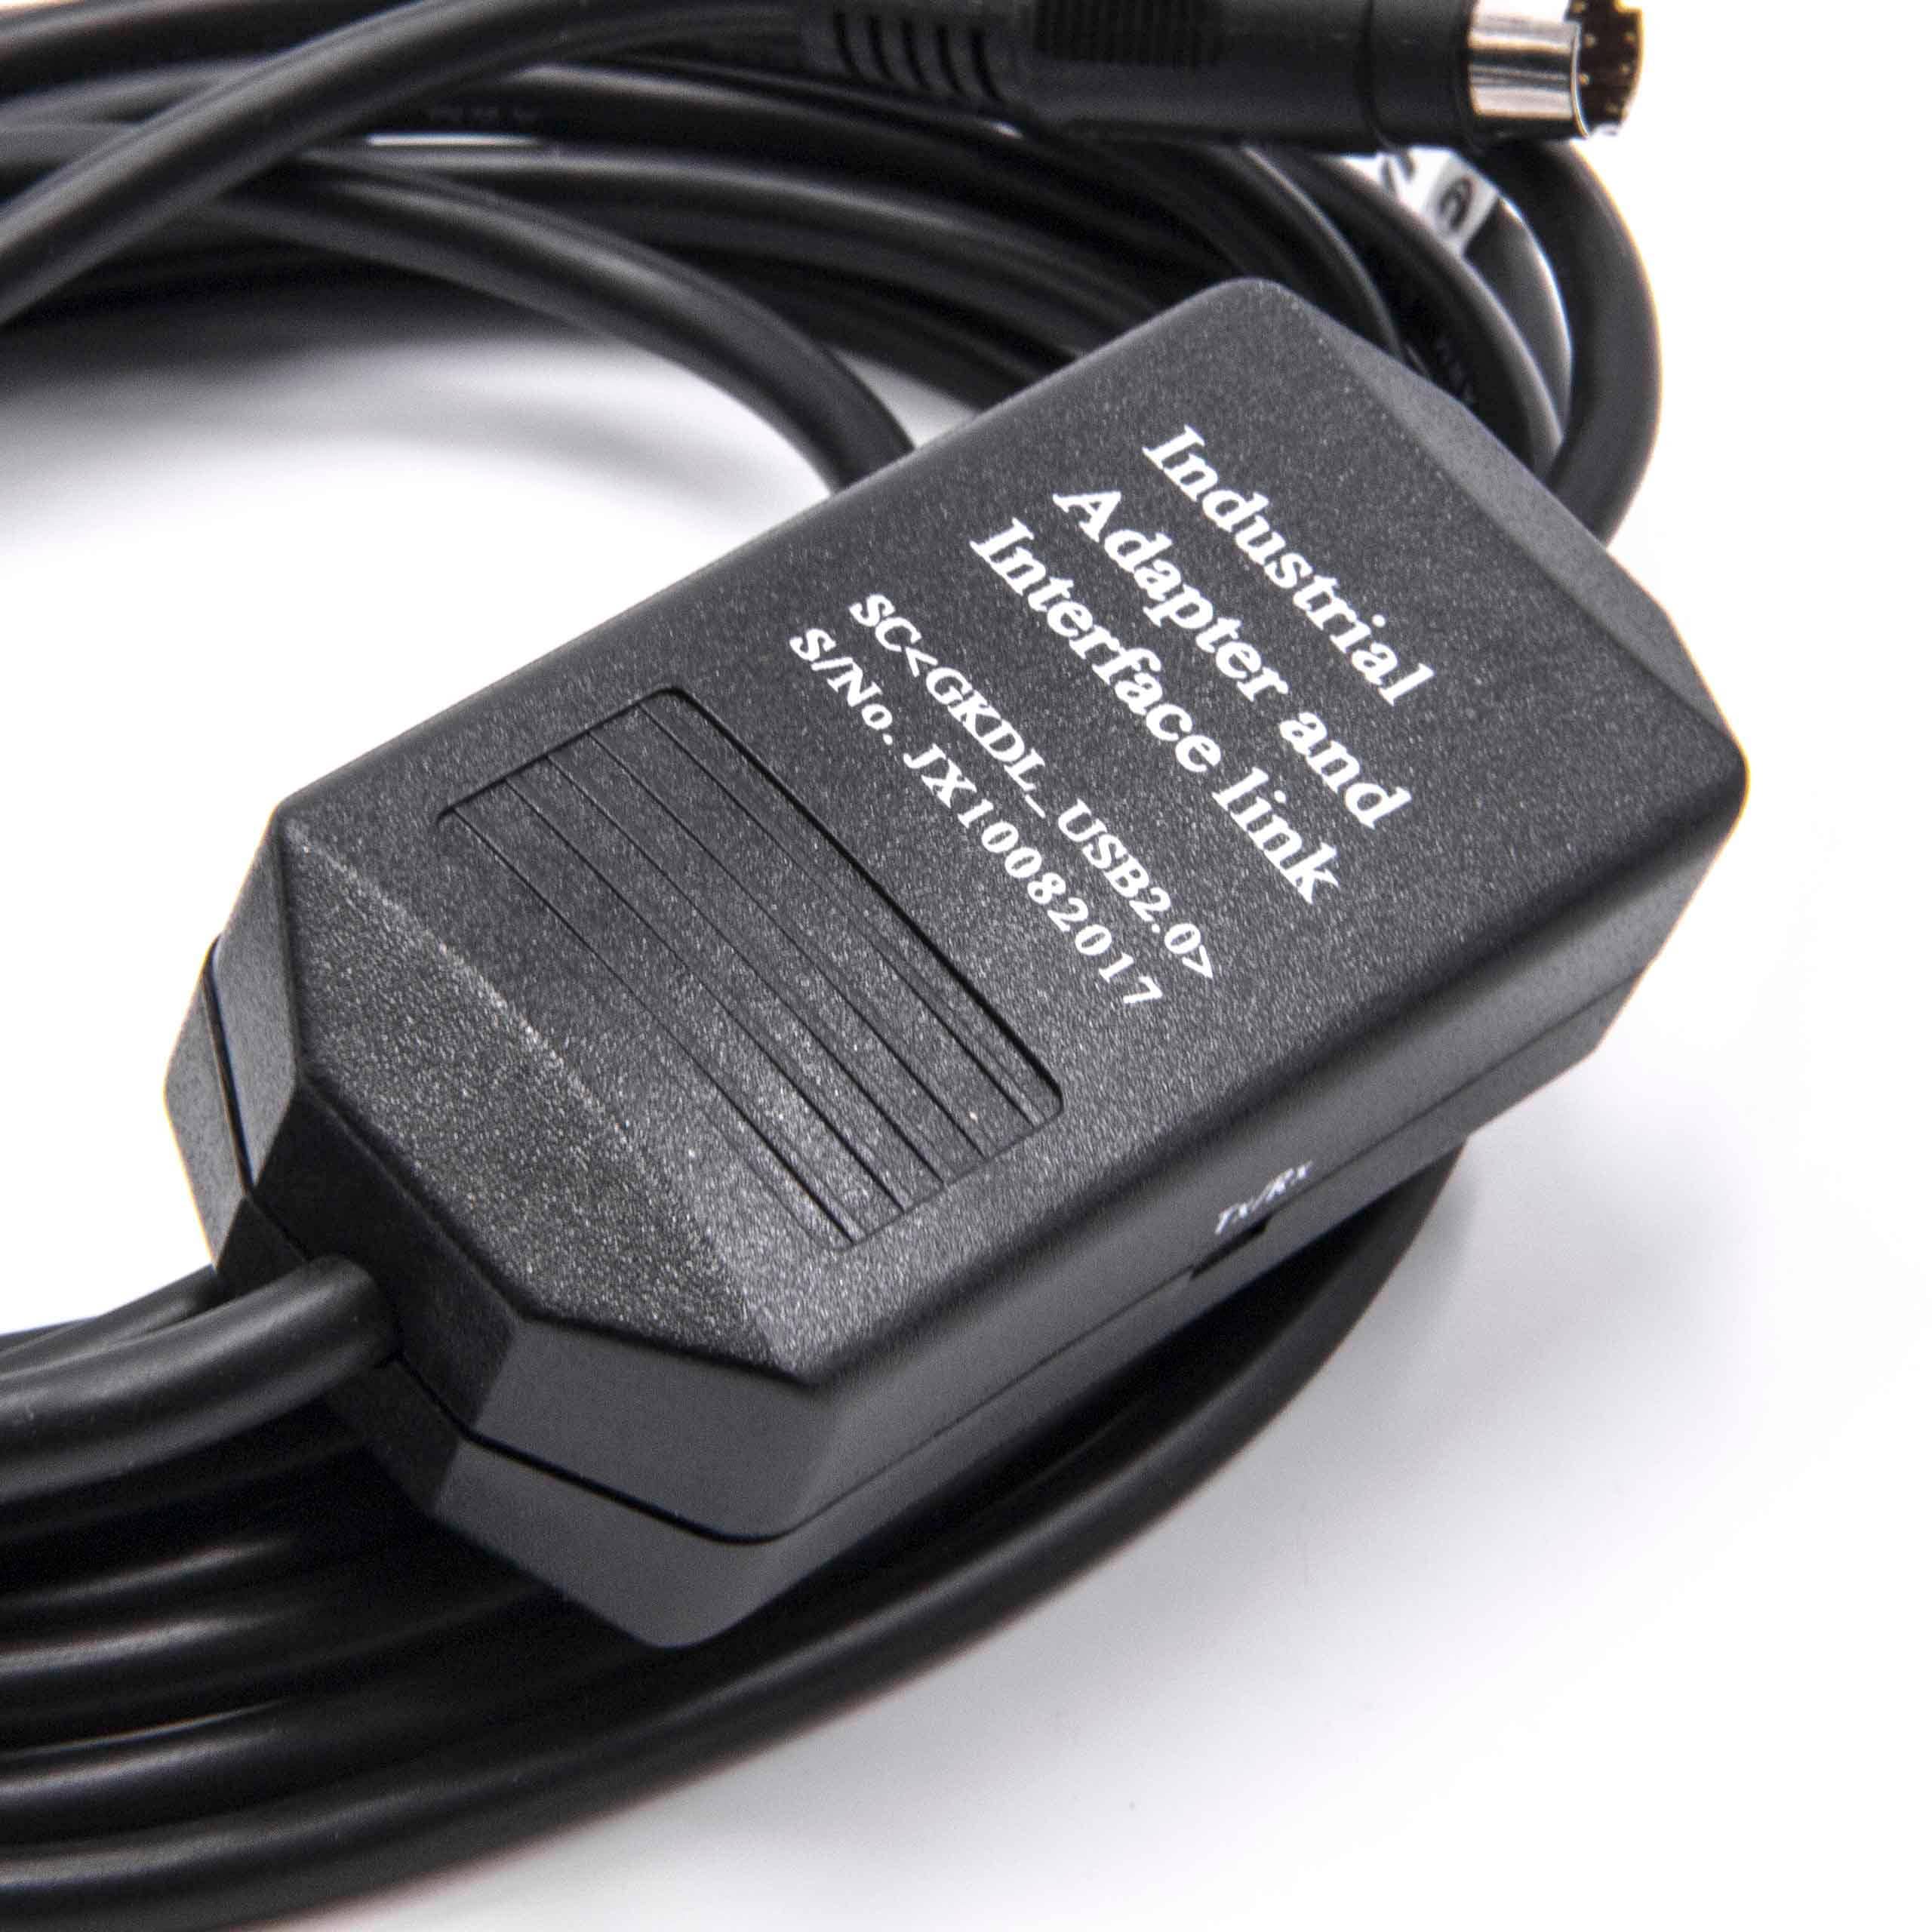 Cable de programación reemplaza USB-1761-CBL-PM02 para radio